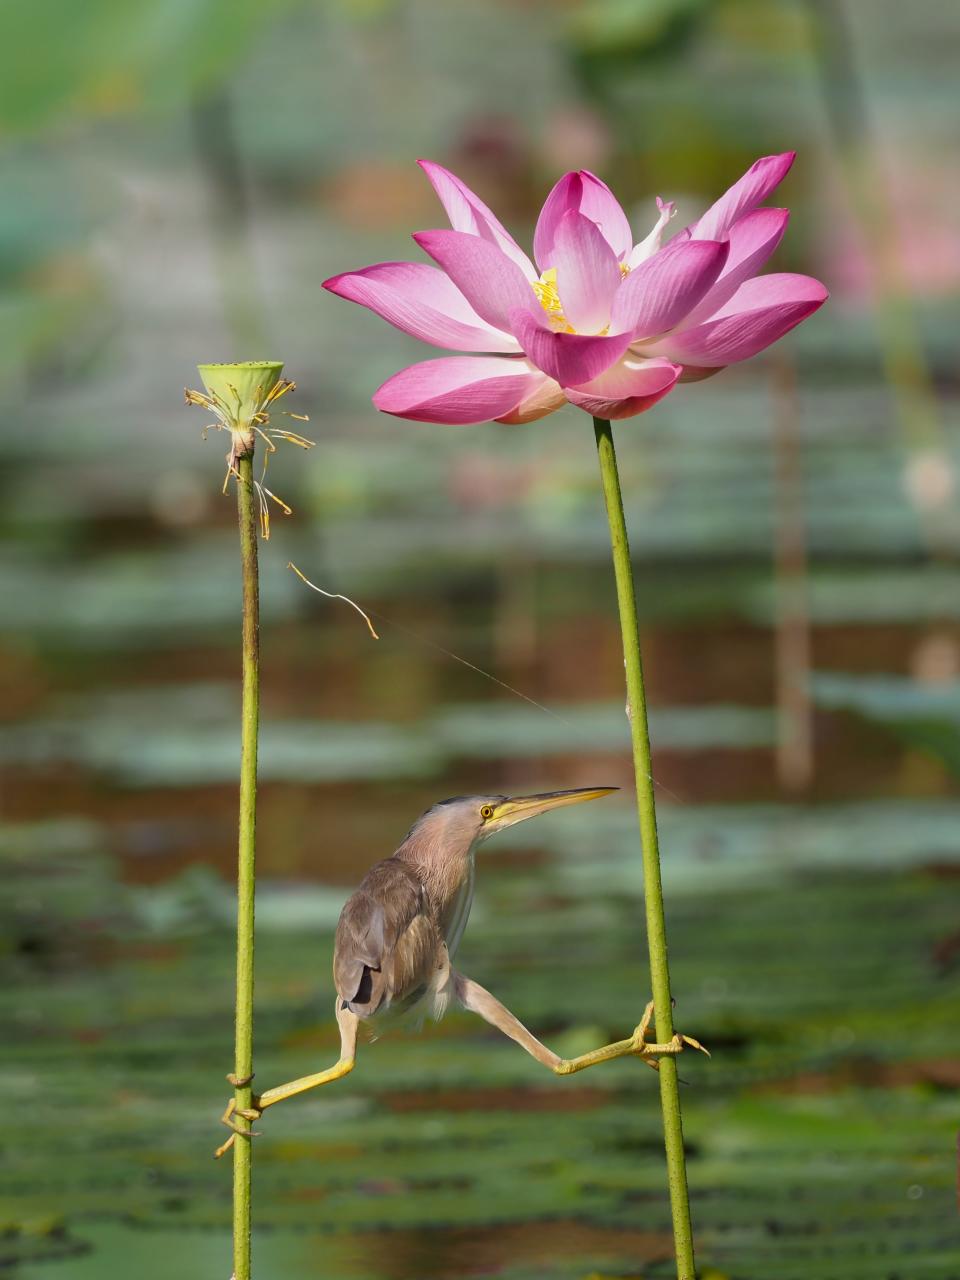 bittern yoga on flower, comedy wildlife photography awards 2021